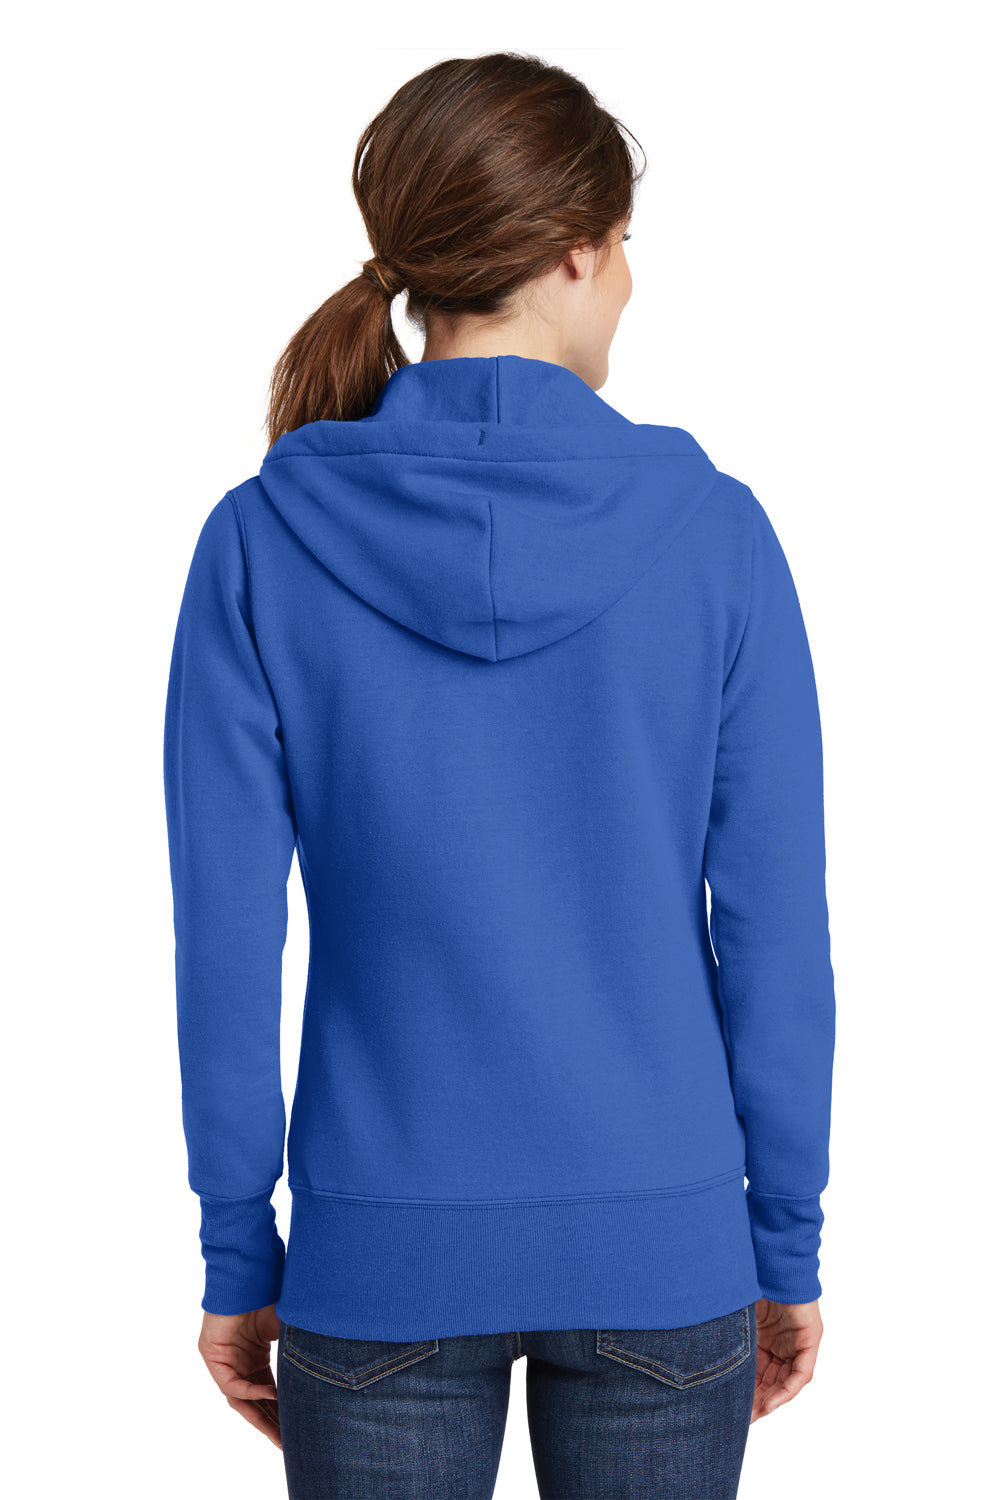 Port & Company LPC78ZH Womens Core Fleece Full Zip Hooded Sweatshirt Hoodie Royal Blue Back